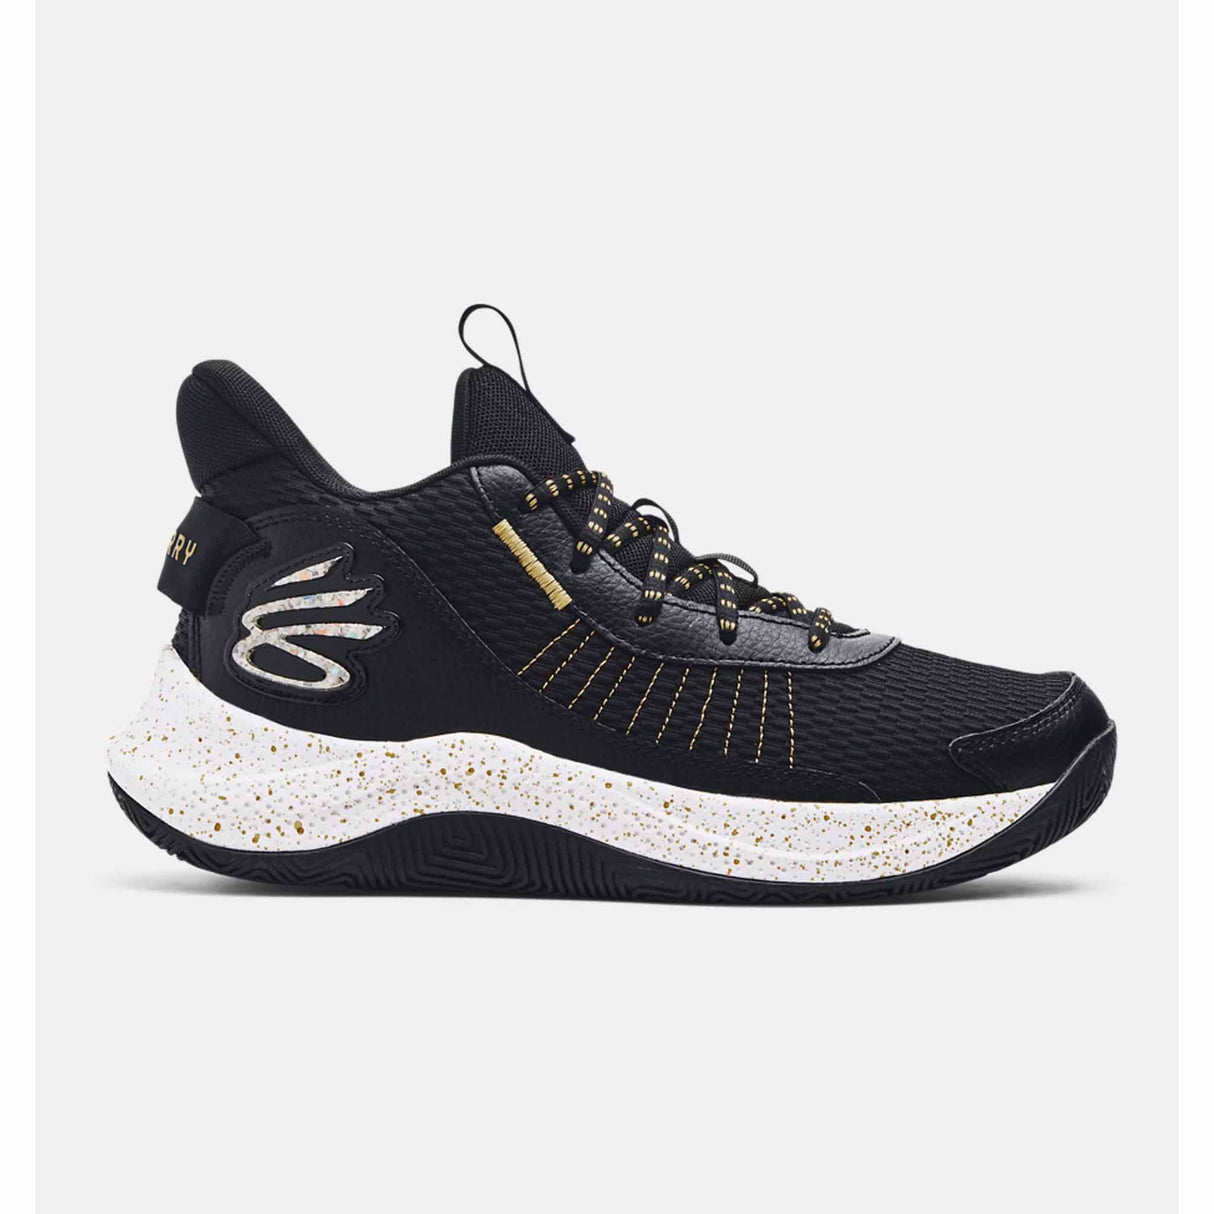 Under Armour Curry 3Z7 chaussures de basketball pour adulte - Black / White